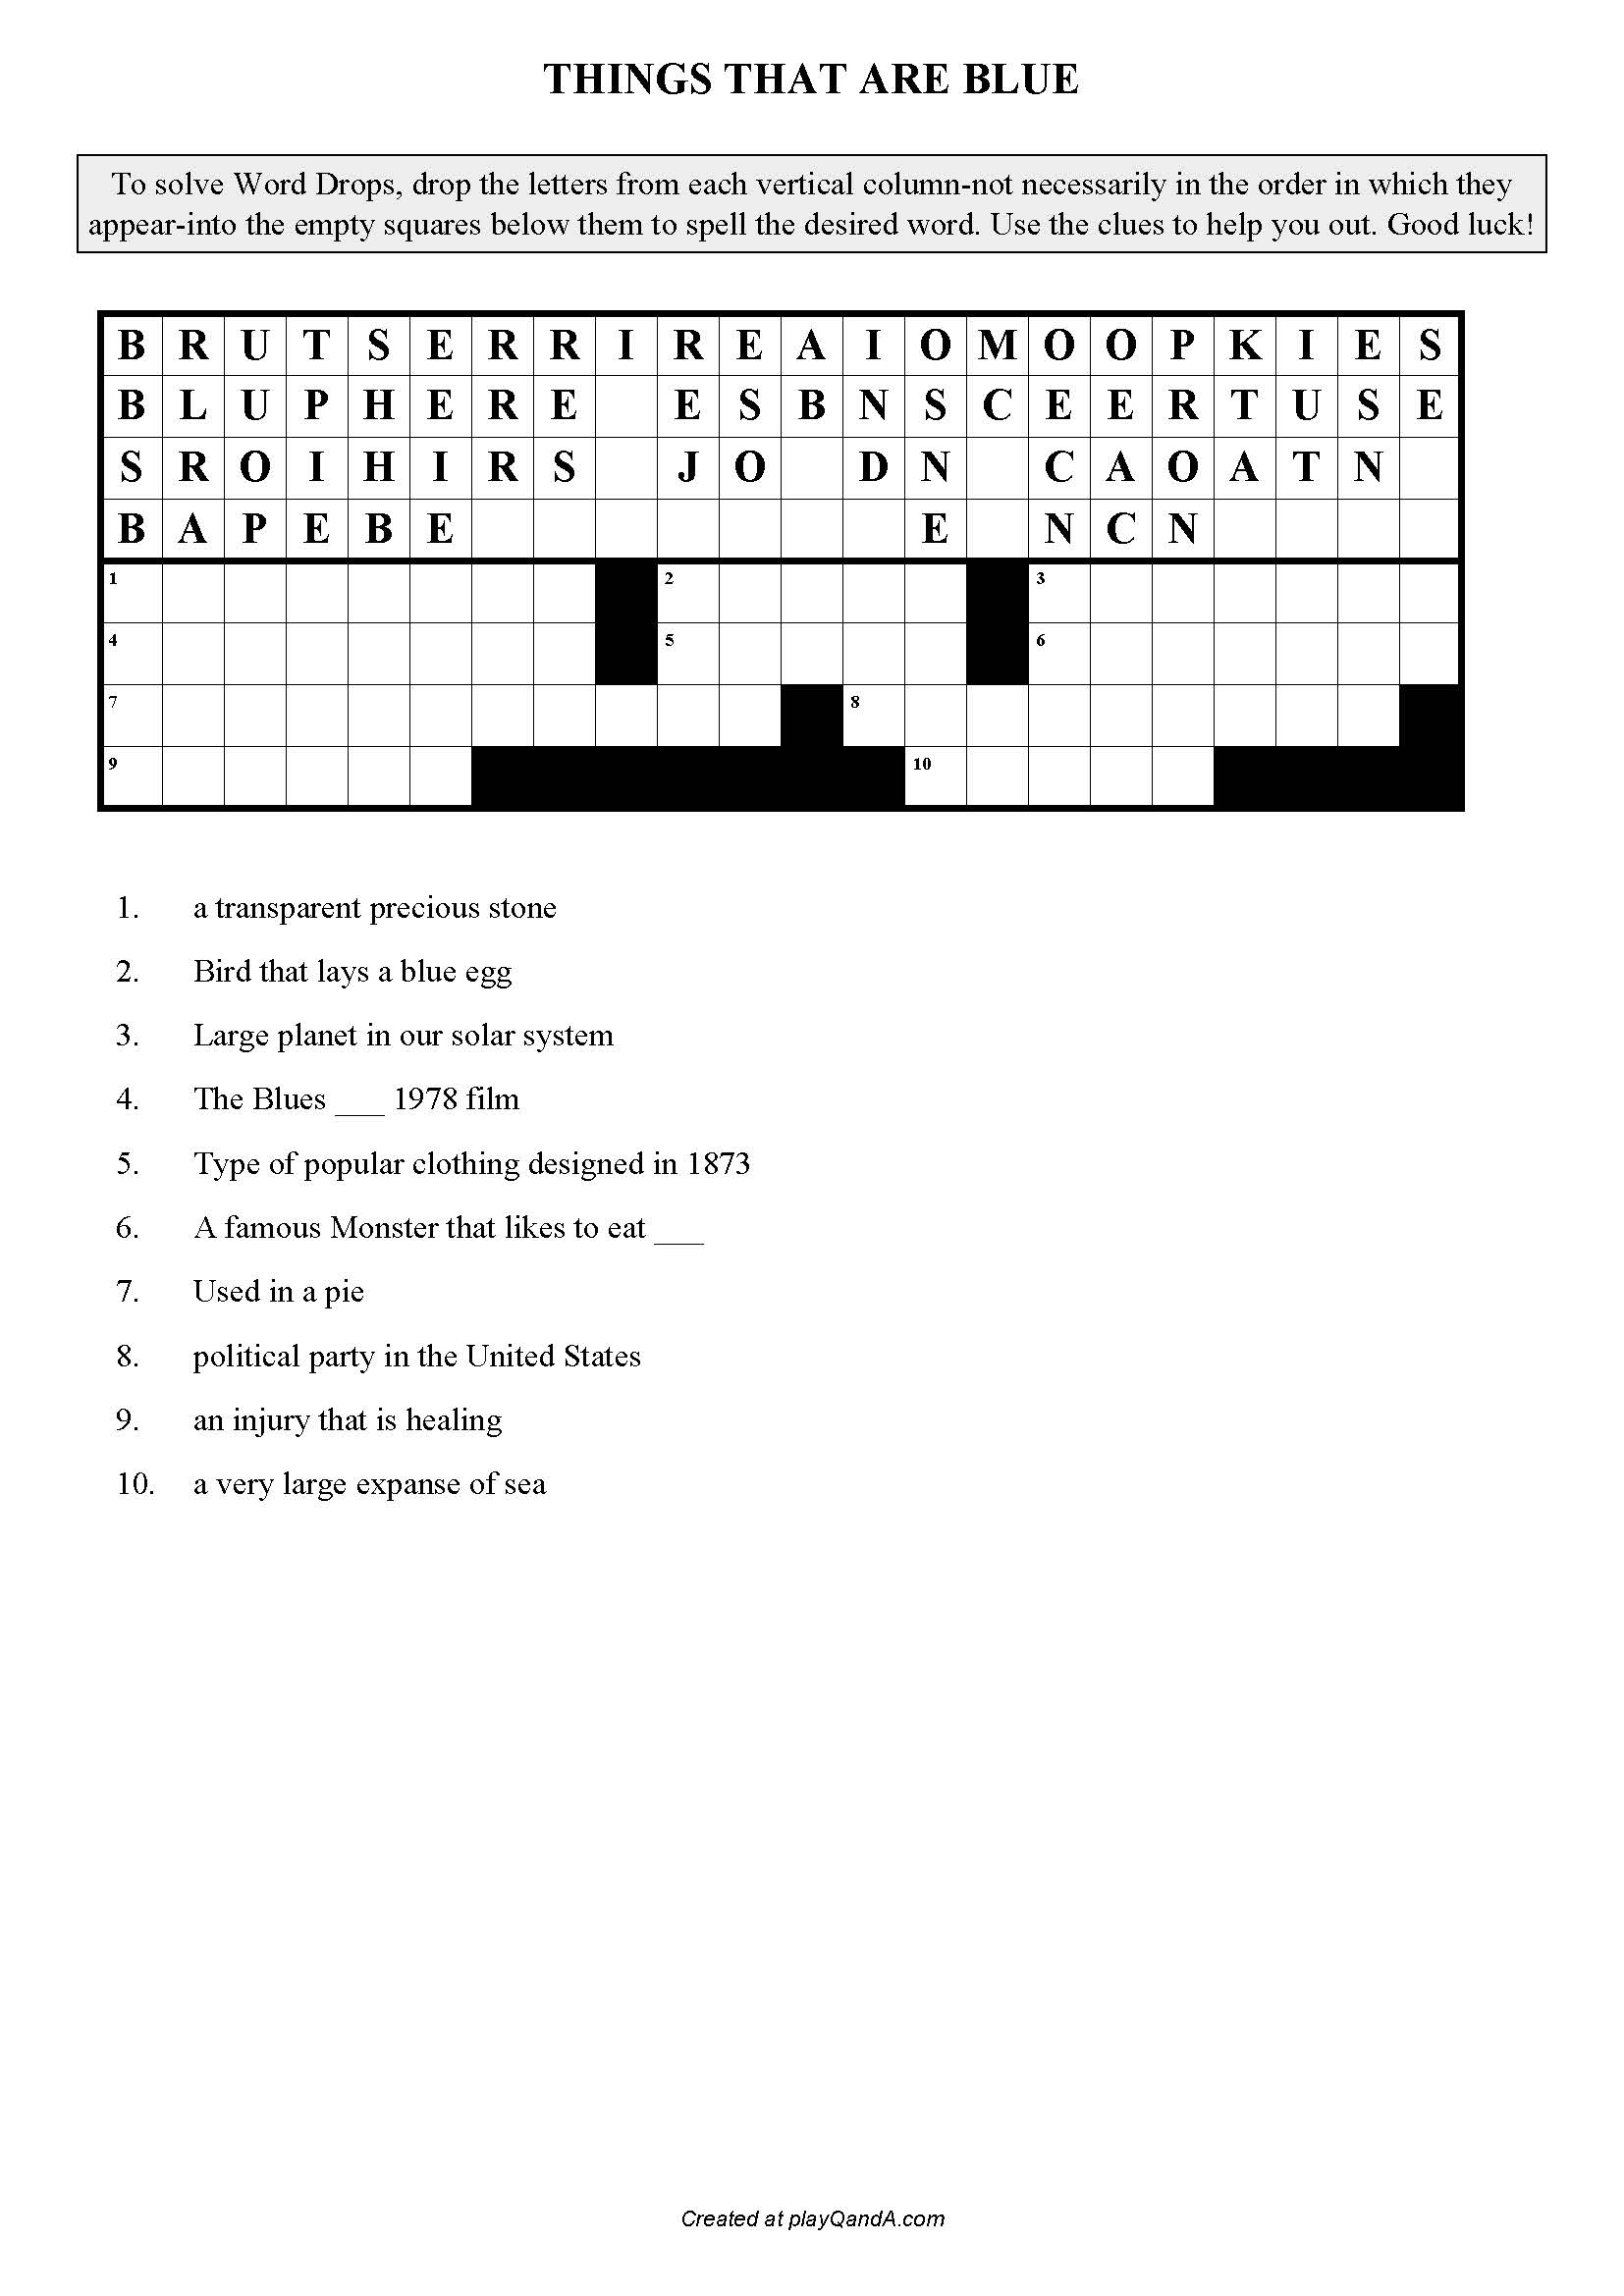 crossword-samp_page_1